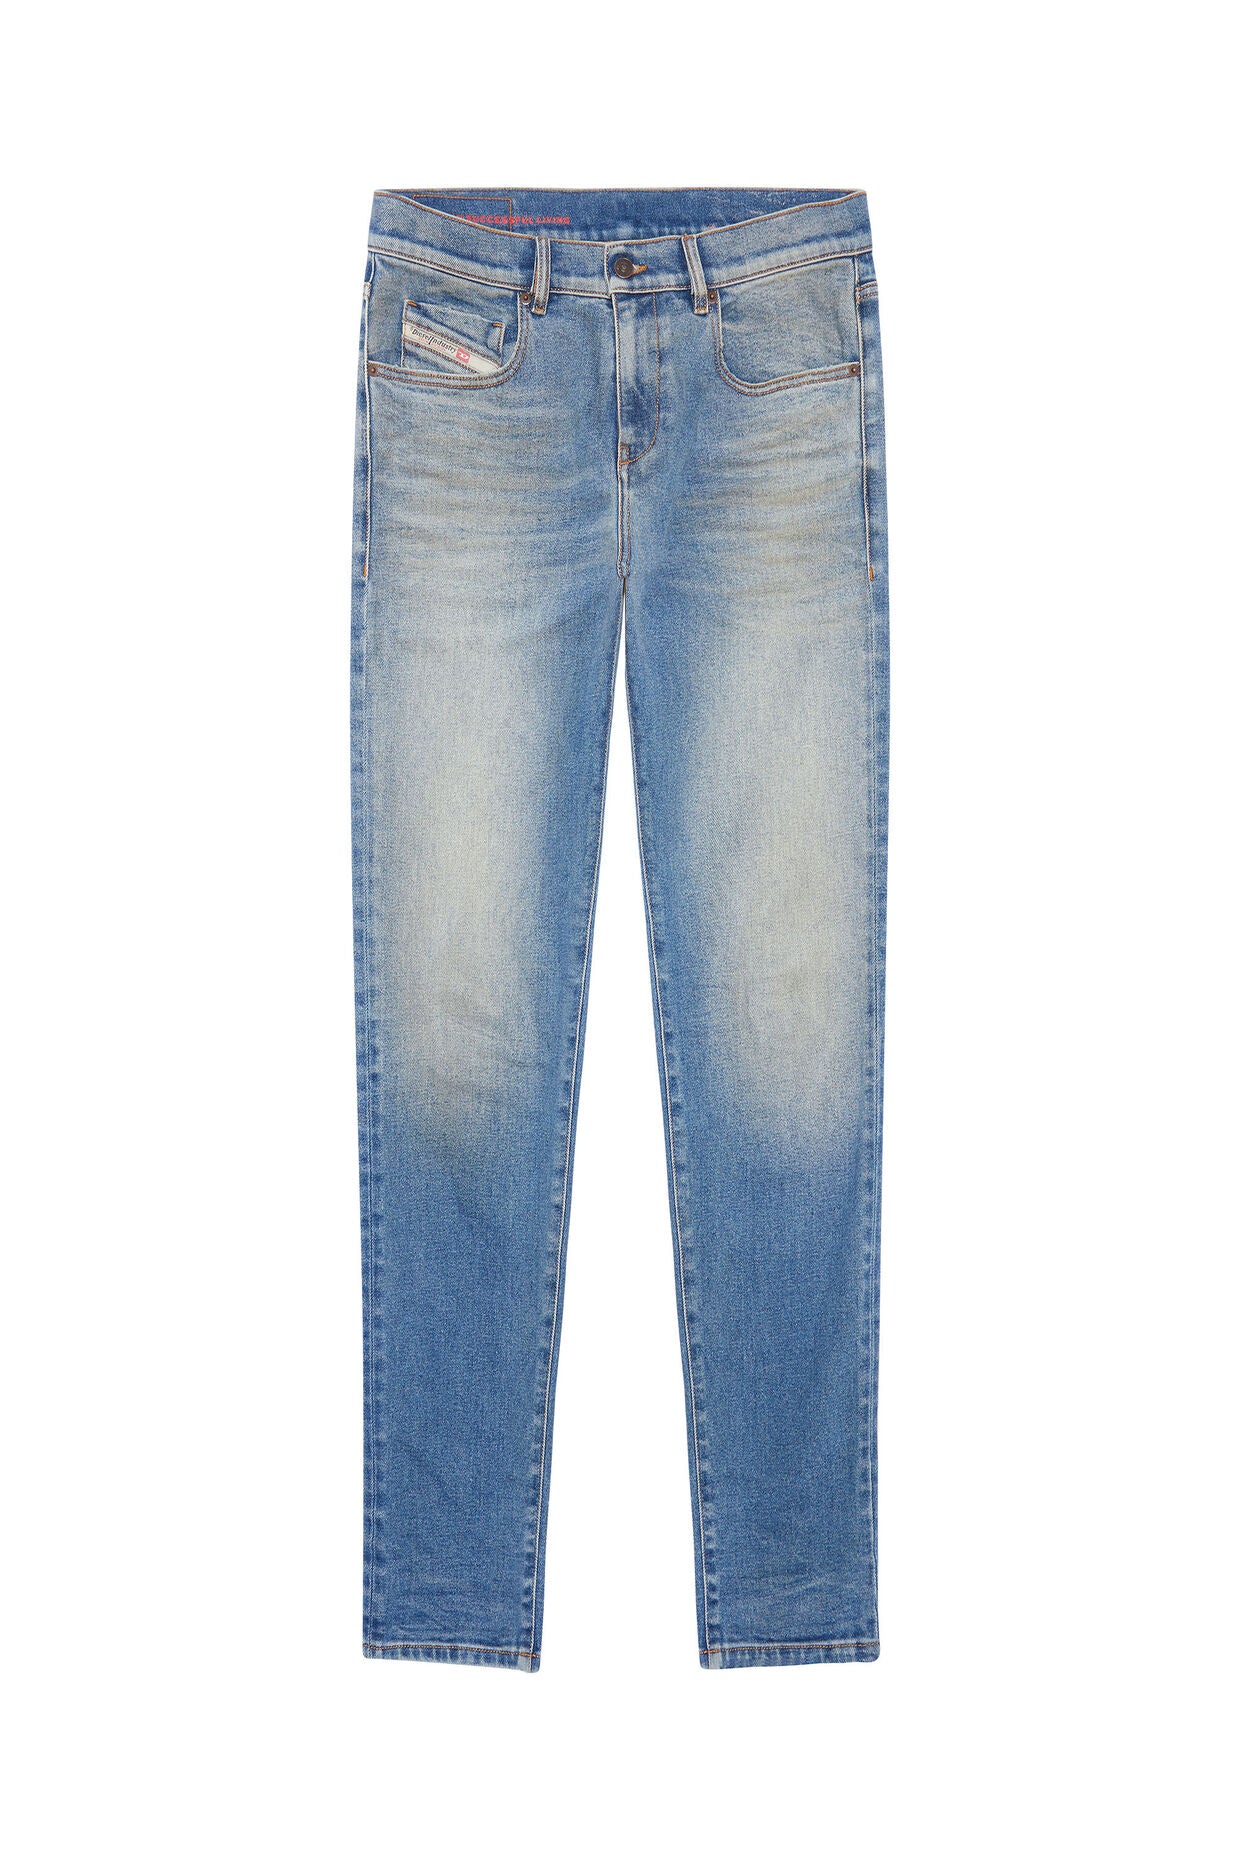 1979 Sleenker 068BI Skinny Jeans Medium Blue Made in Italy 🇮🇹